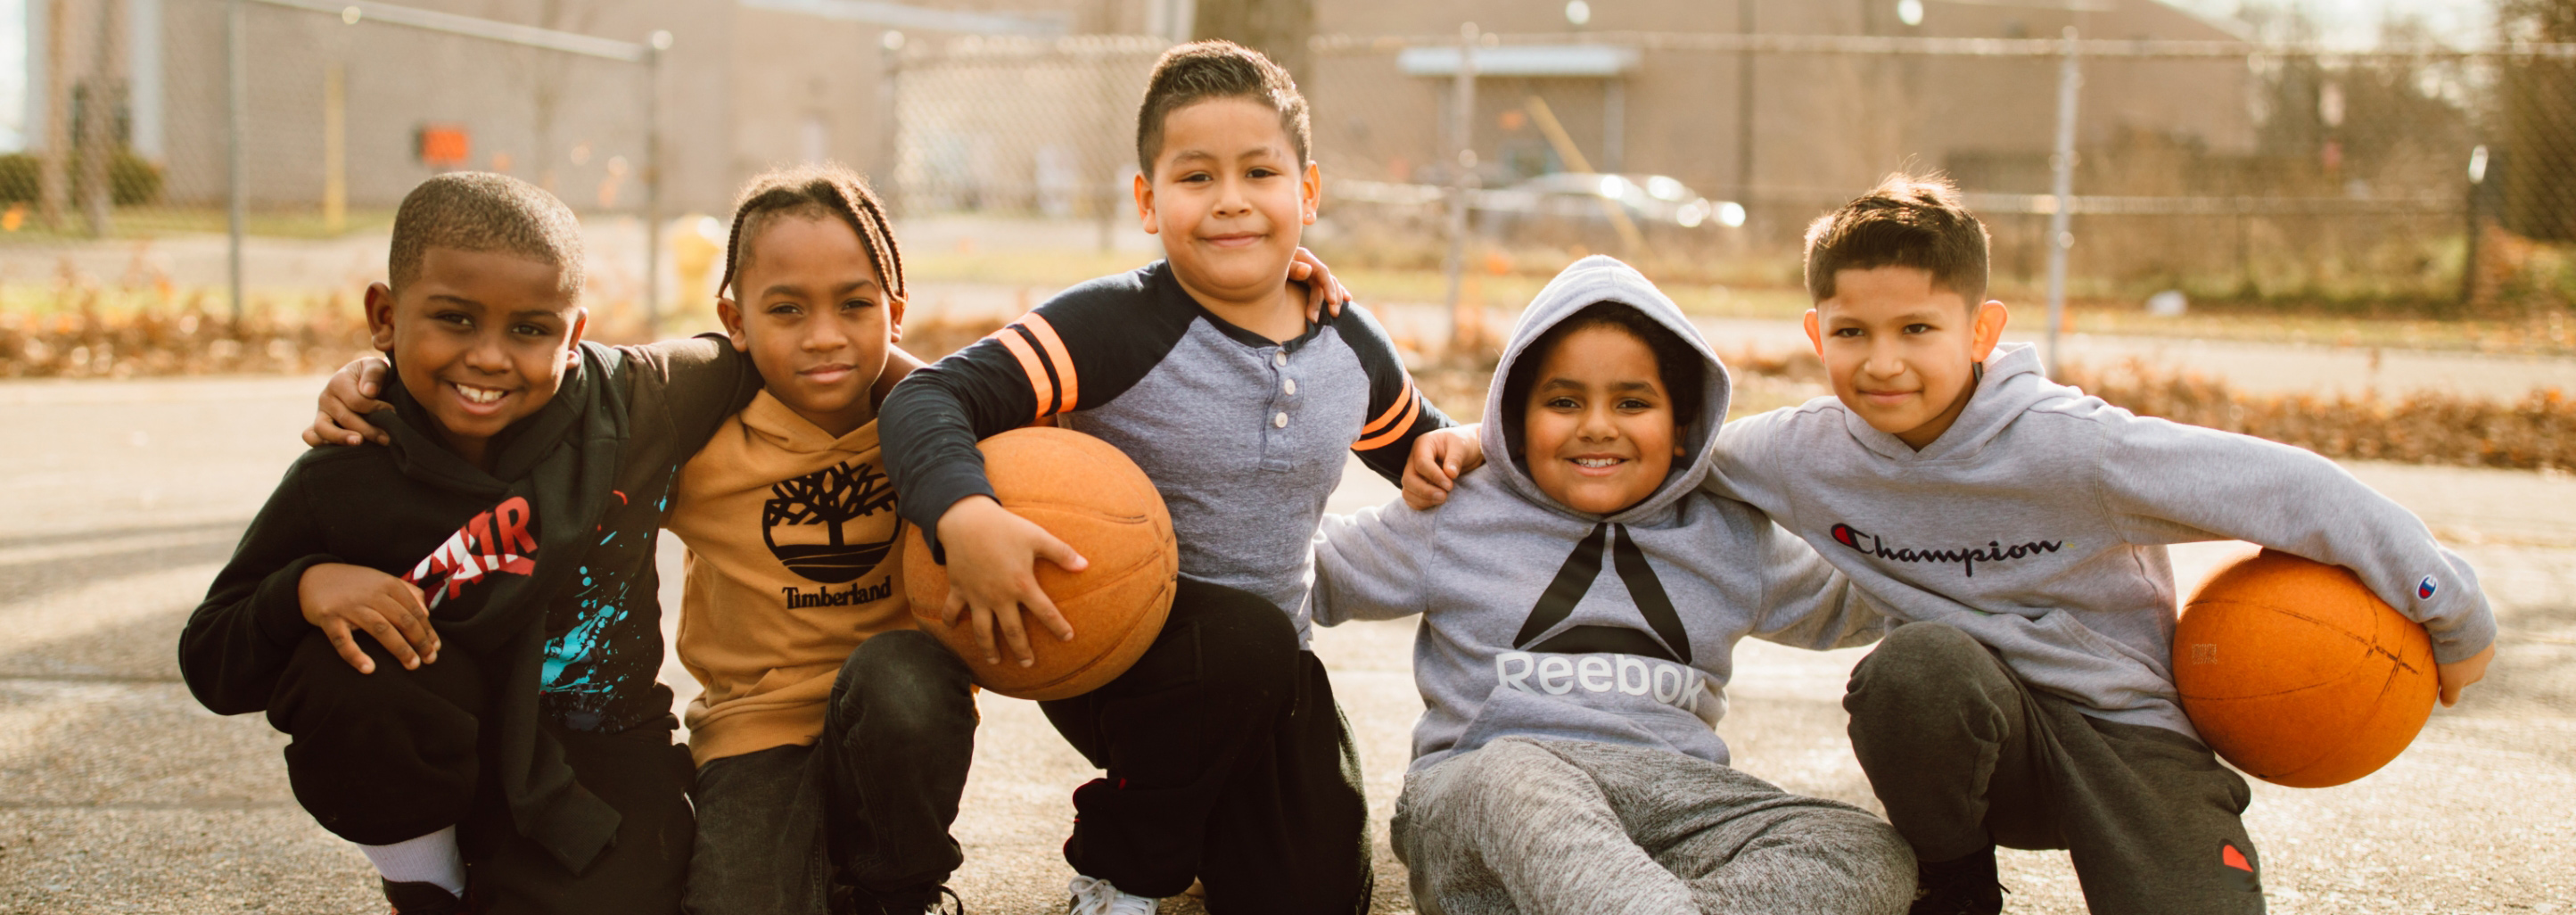 young boys holding basketballs on a basketball court